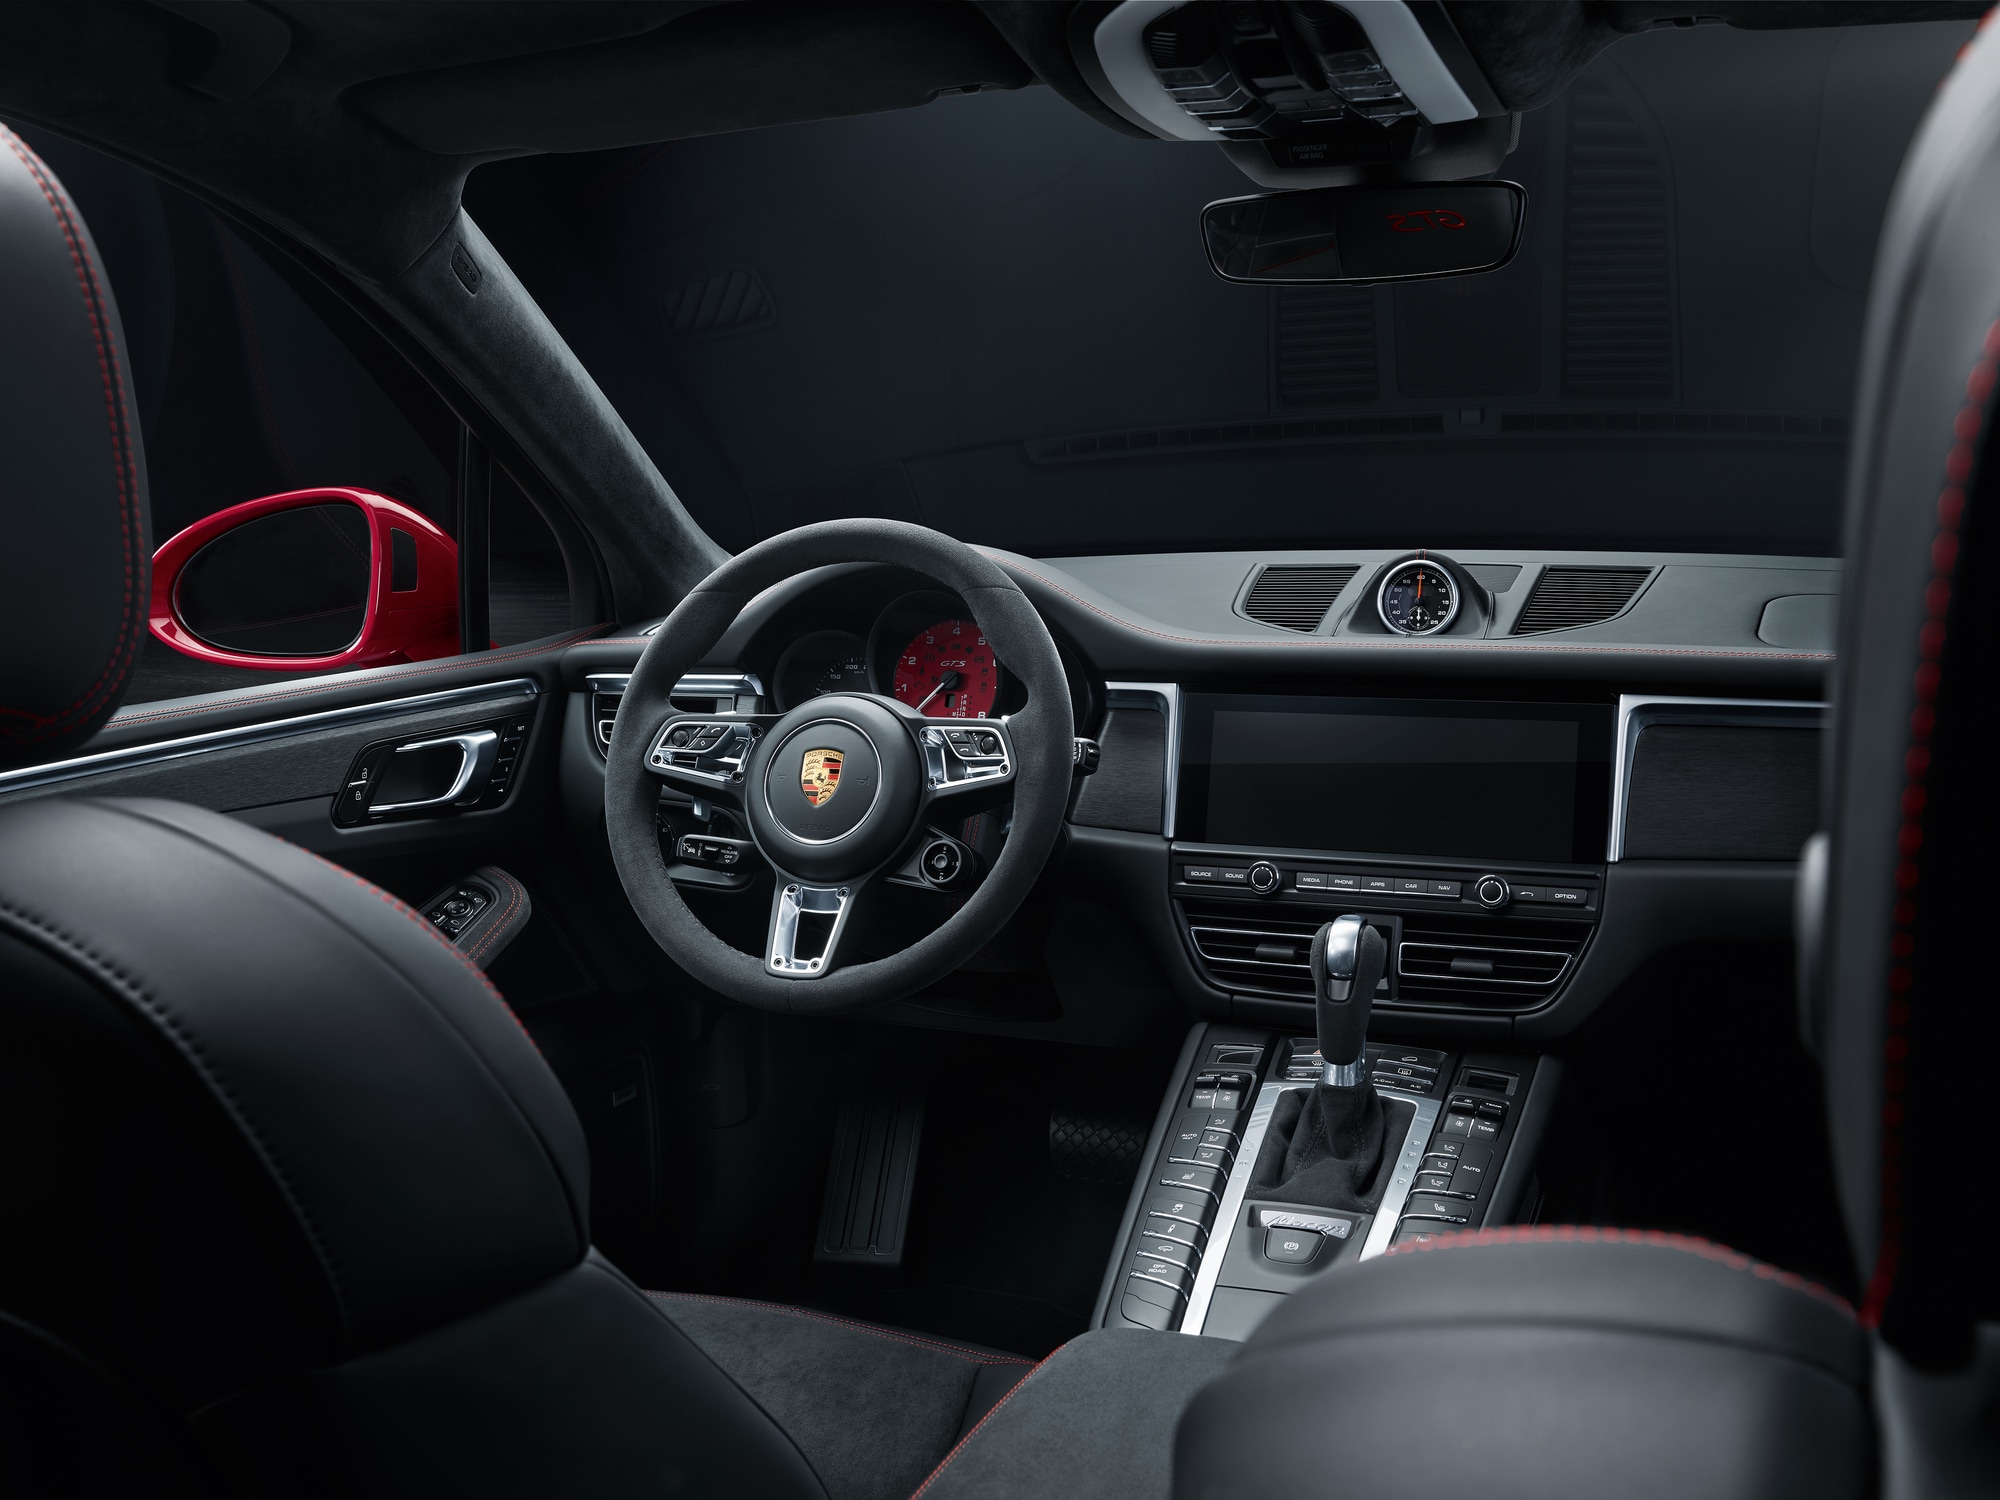 New Porsche Macan Passenger Seat, Steering Wheel, and Dashboard.